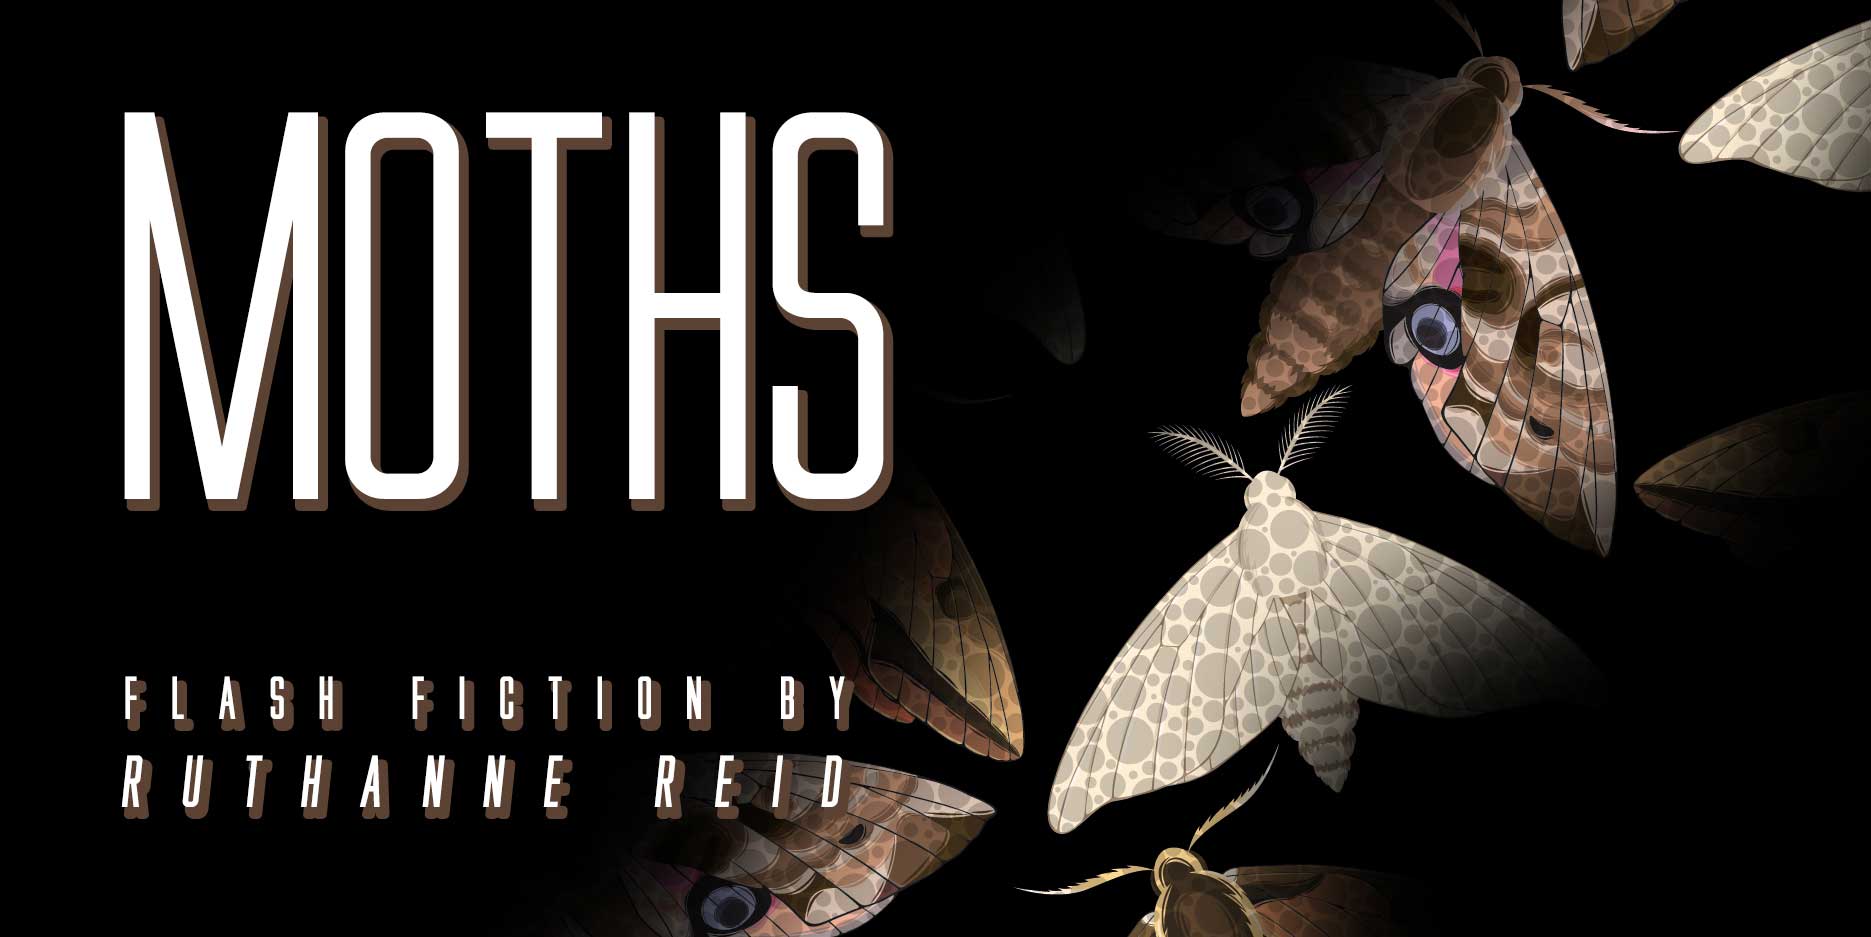 Moths: flash fiction by Ruthanne Reid